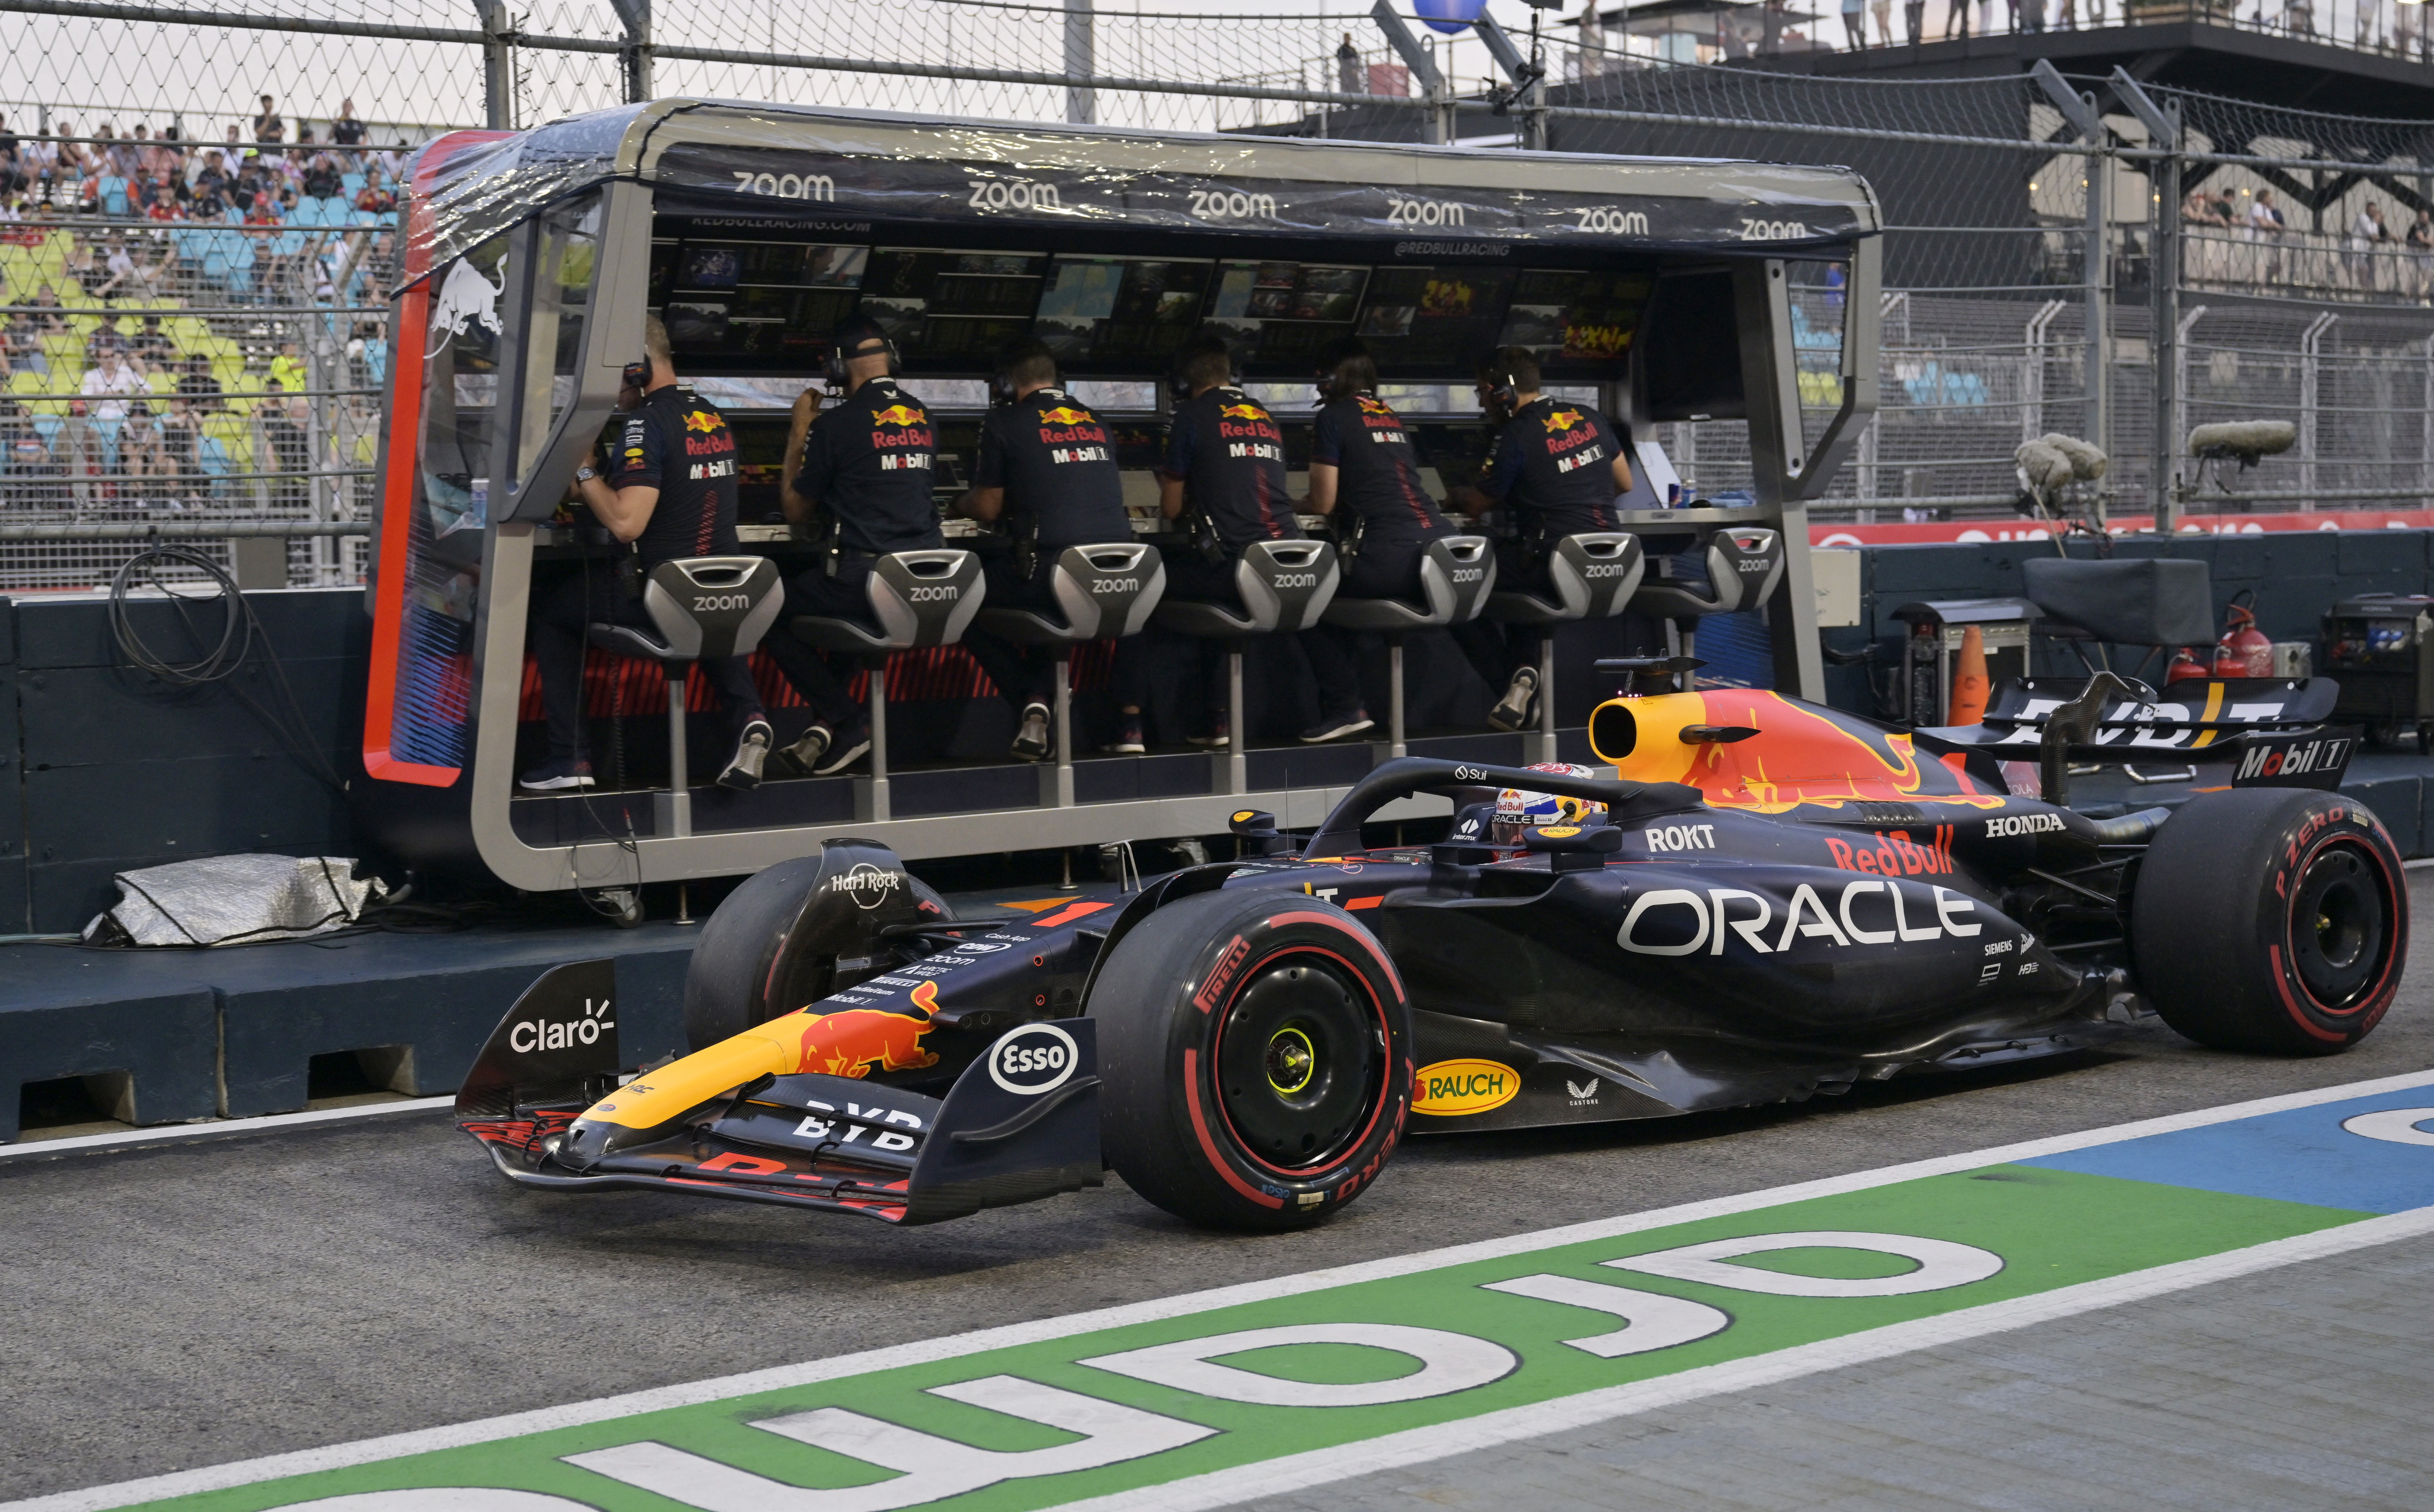 Max Verstappen hails third Formula One championship title as 'best' yet, Motorsports News